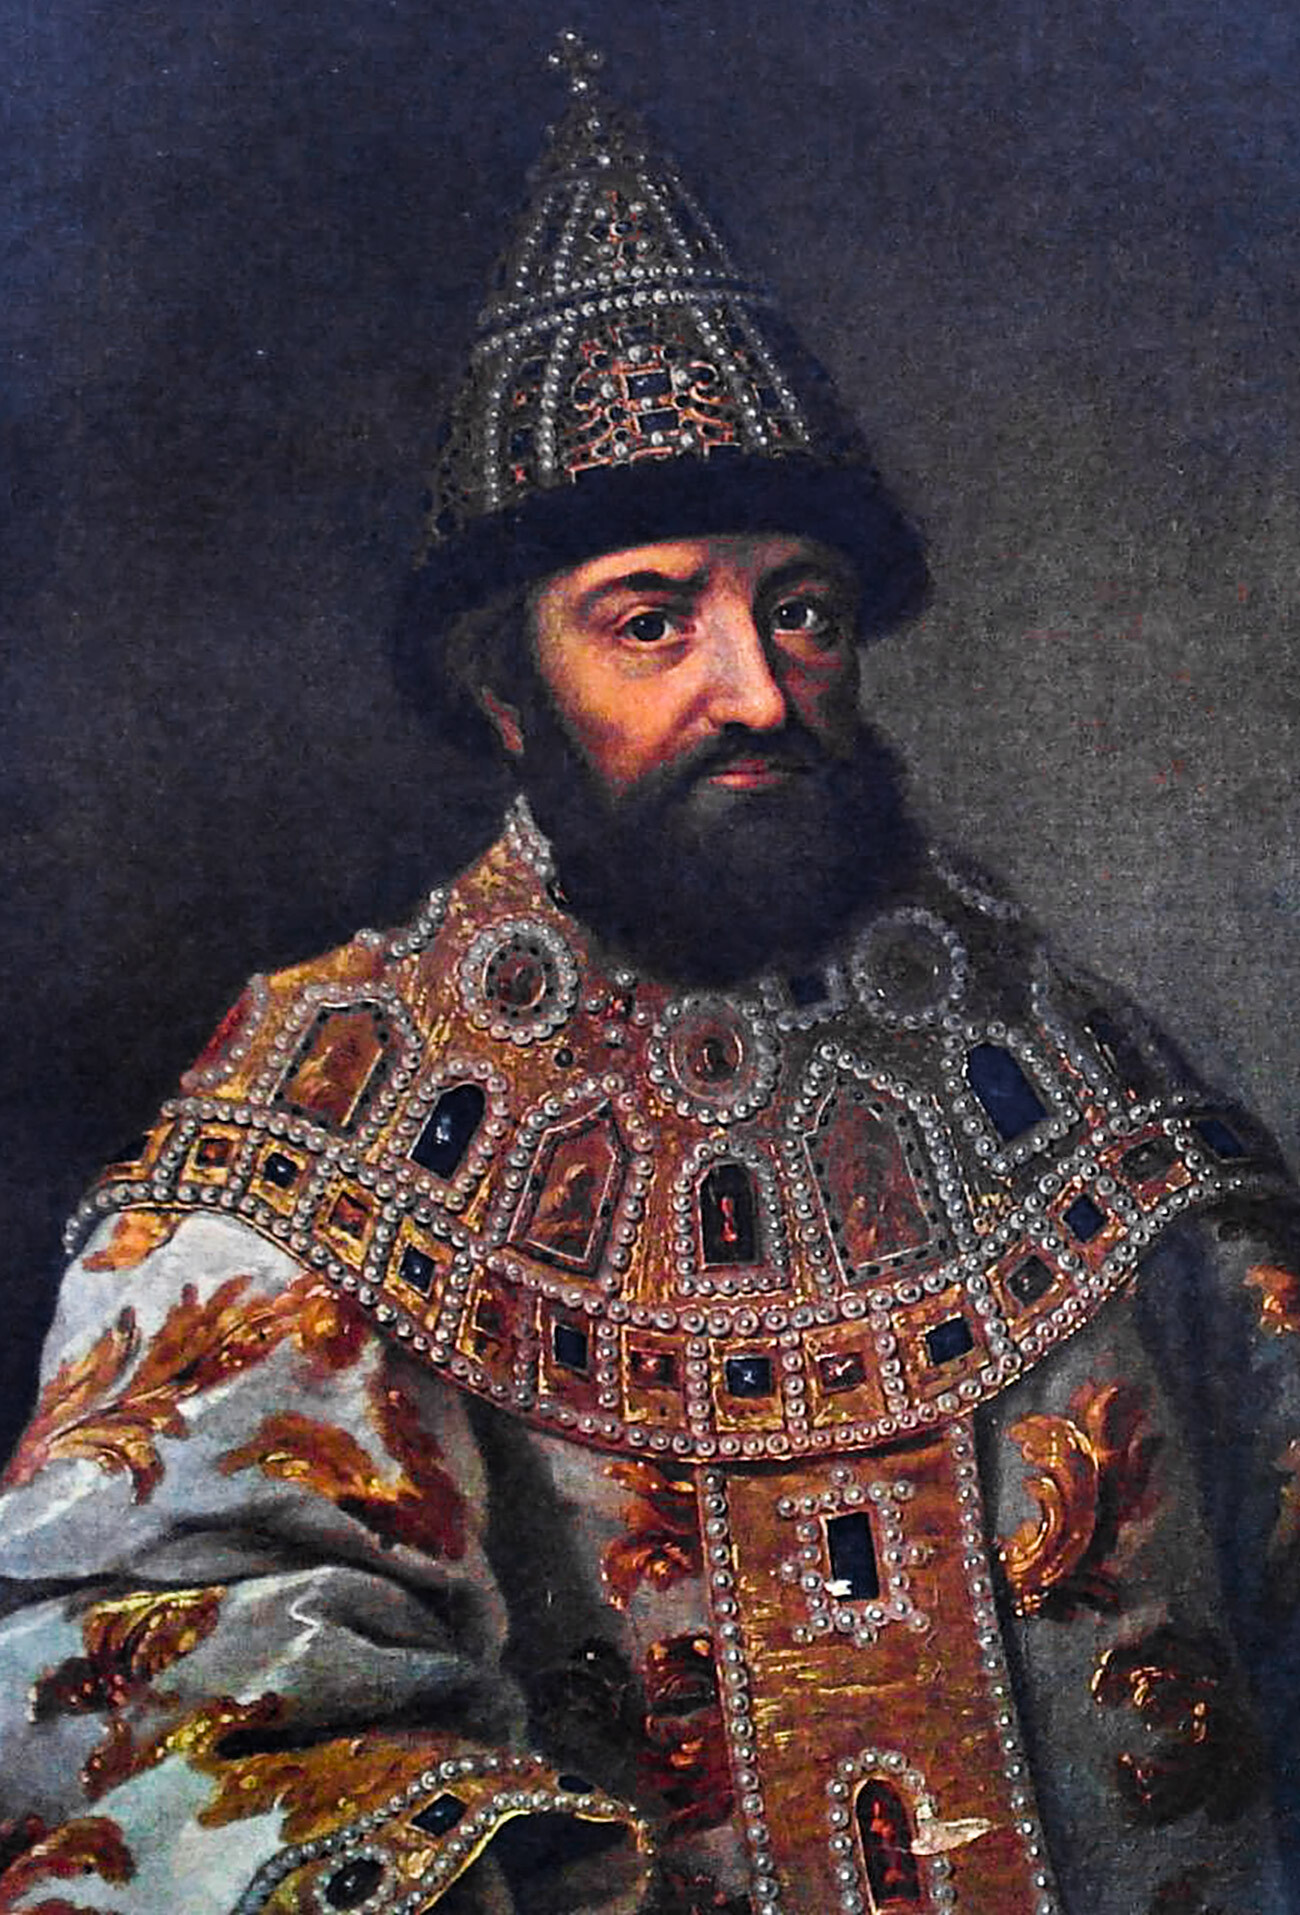 Car Mihail Fjodorovič Romanov